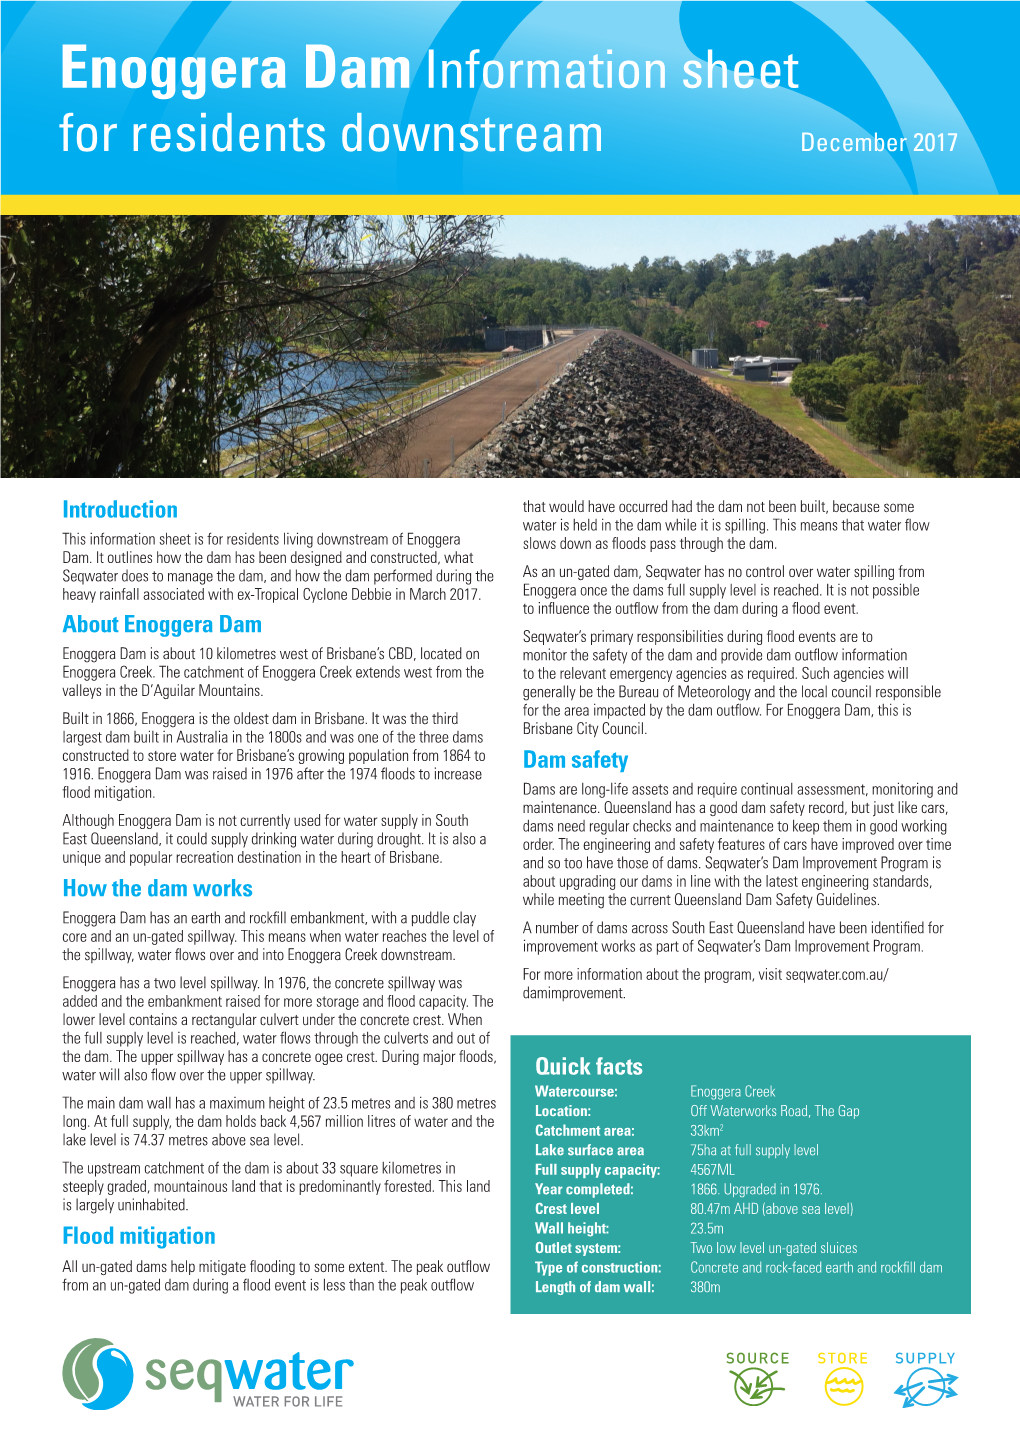 Enoggera Dam Information Sheet for Residents Downstream December 2017